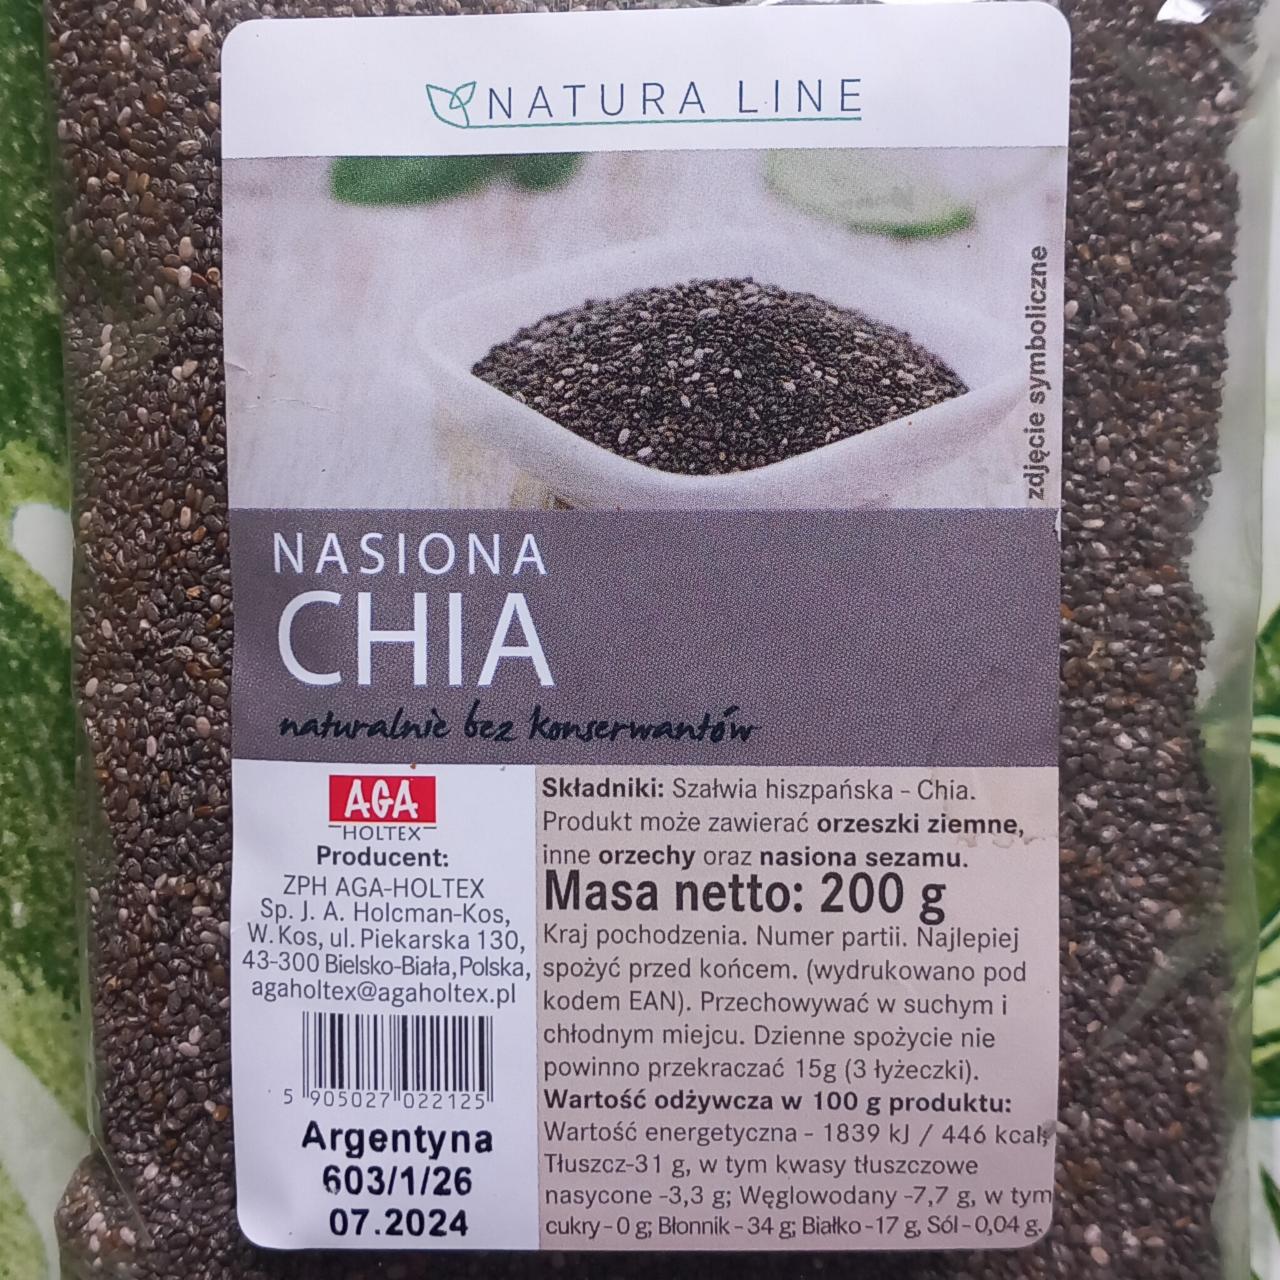 Zdjęcia - Nasiona chia Natura line